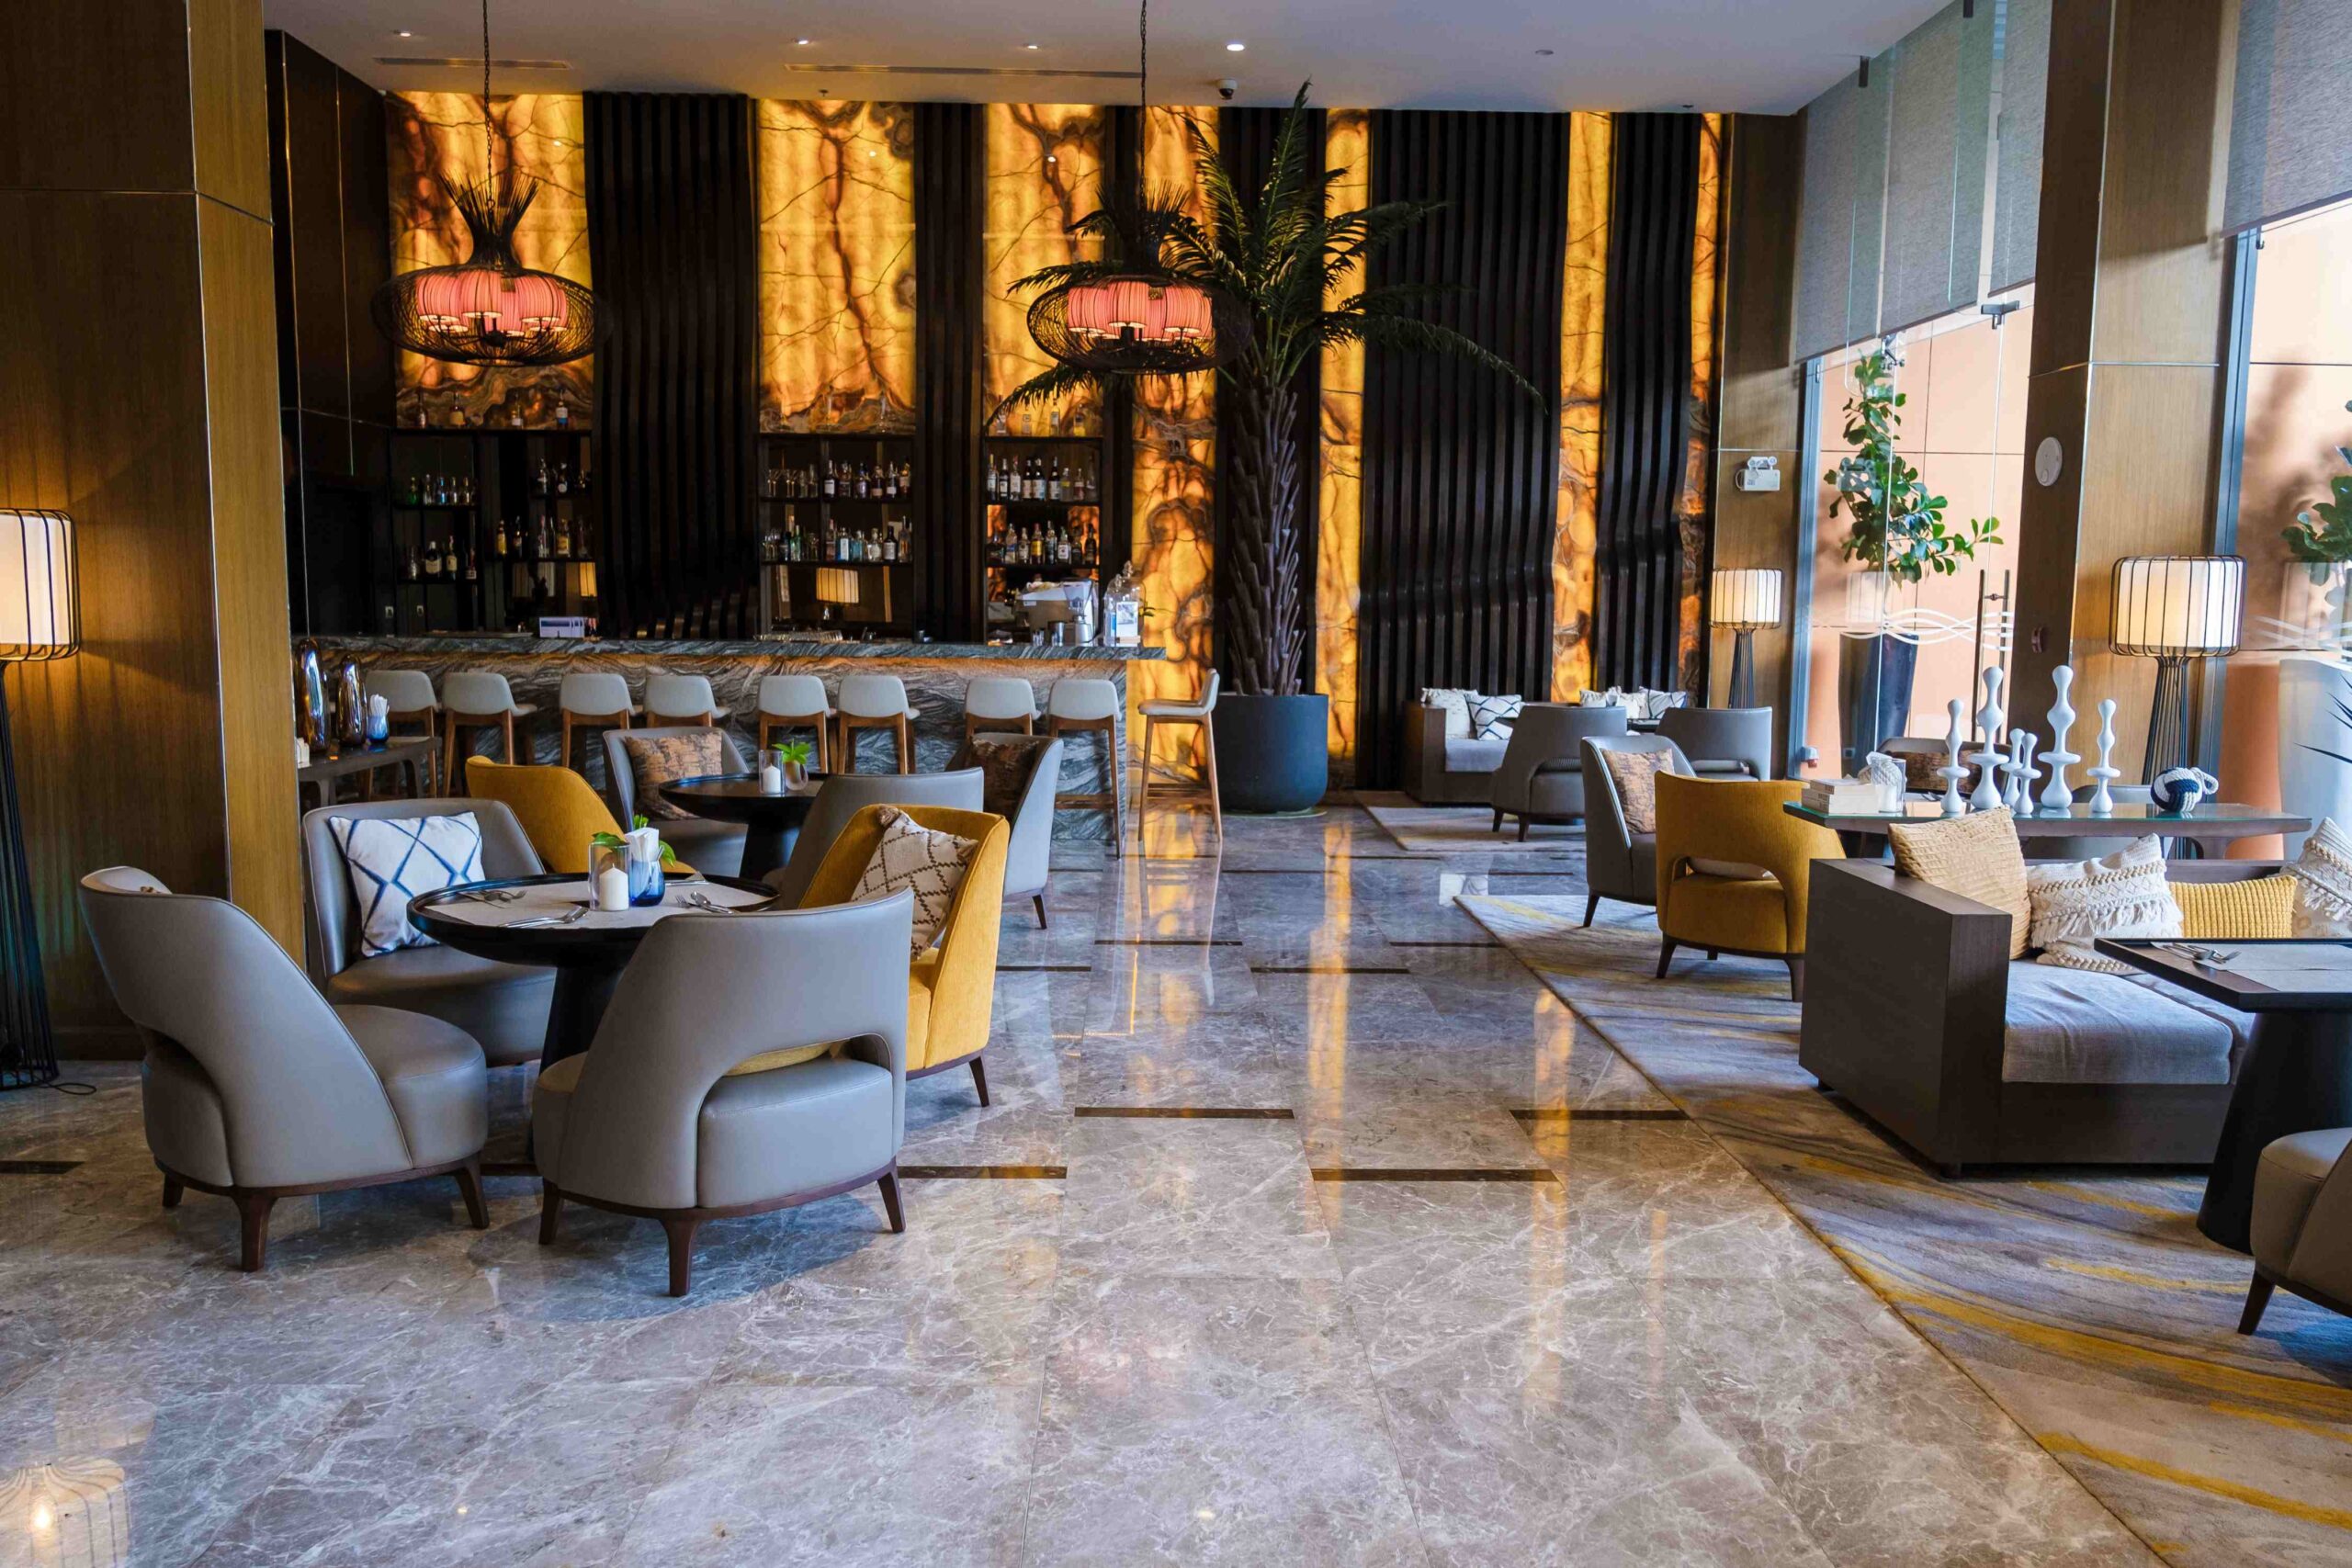 Luxury hotel restaurant interior design